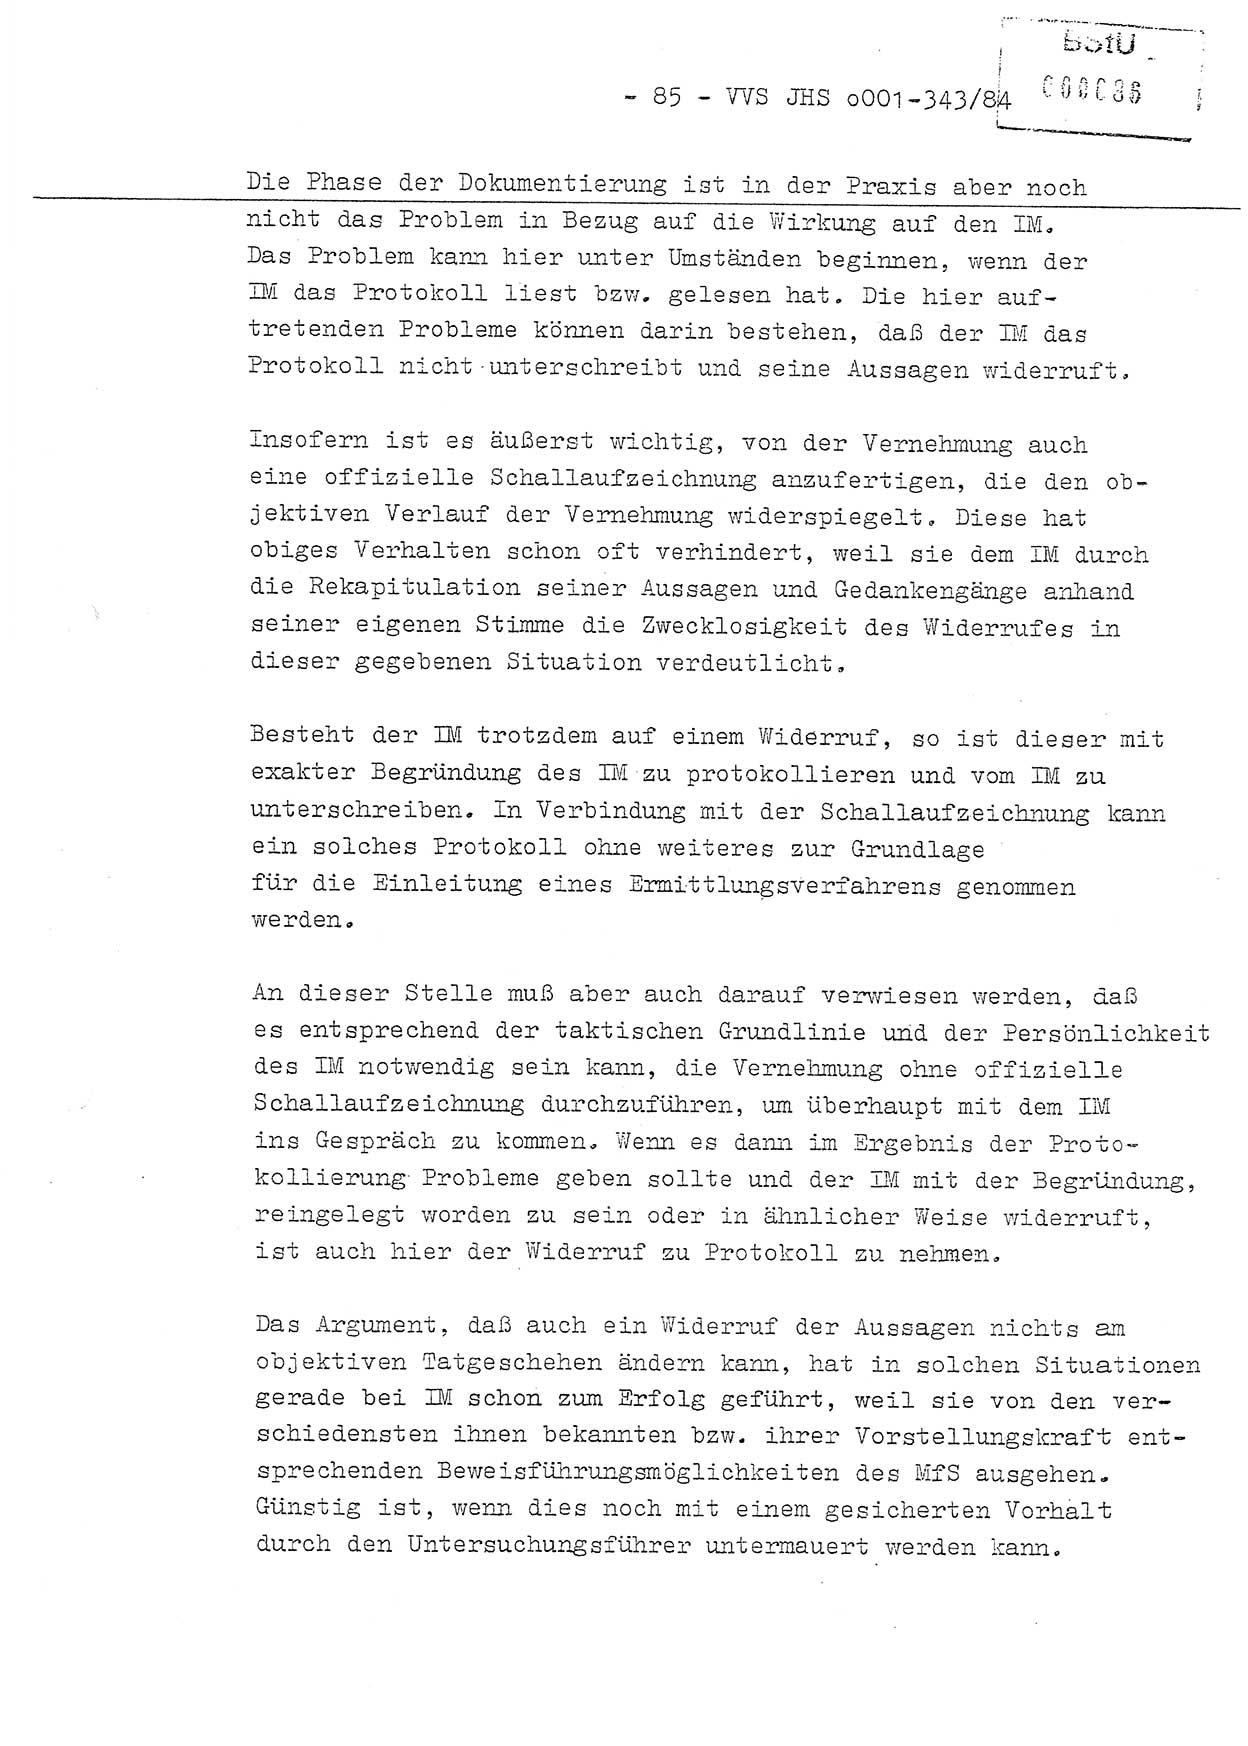 Diplomarbeit, Oberleutnant Bernd Michael (HA Ⅸ/5), Oberleutnant Peter Felber (HA IX/5), Ministerium für Staatssicherheit (MfS) [Deutsche Demokratische Republik (DDR)], Juristische Hochschule (JHS), Vertrauliche Verschlußsache (VVS) o001-343/84, Potsdam 1985, Seite 85 (Dipl.-Arb. MfS DDR JHS VVS o001-343/84 1985, S. 85)